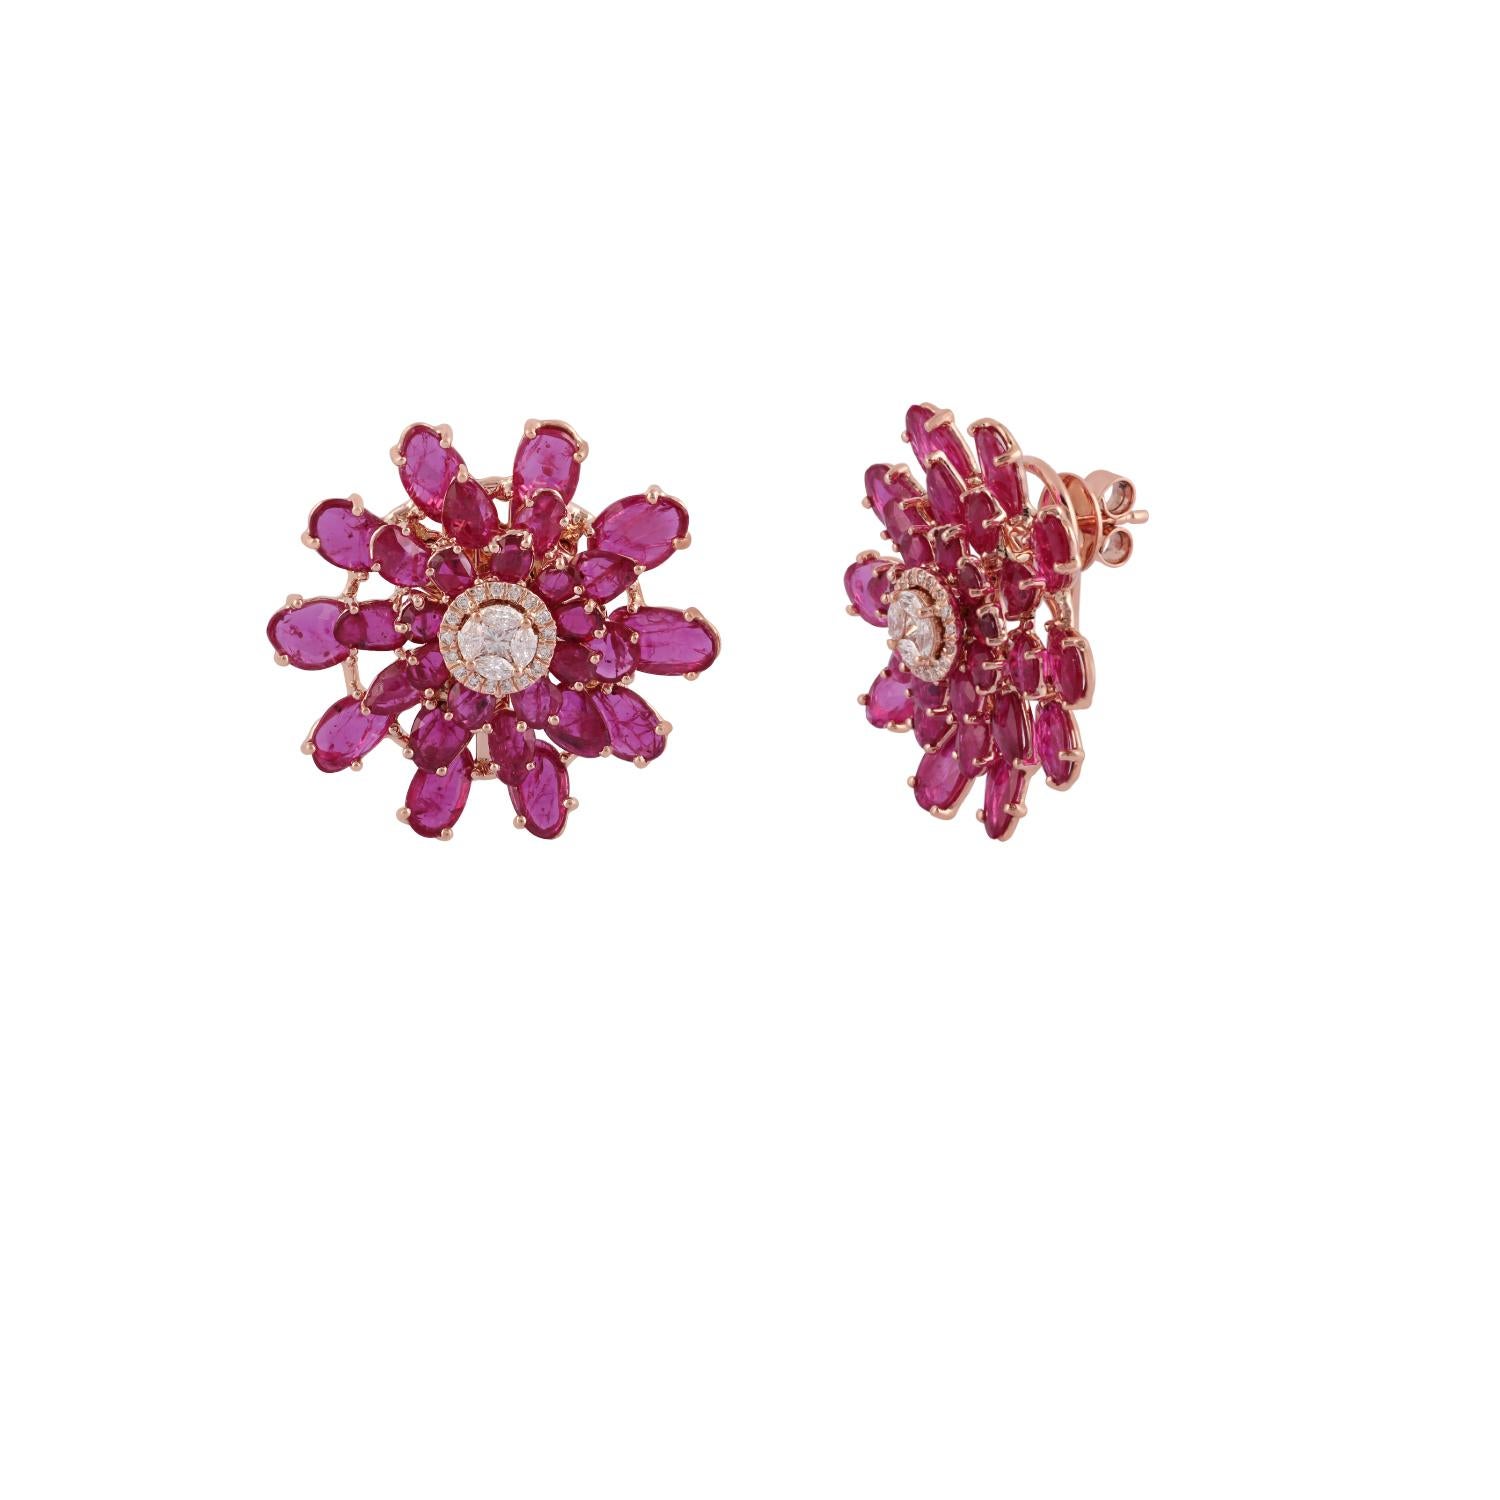 Uneven-shaped Rose-Cut Rubies 15.89 carats
Full-cut Marquise and Princess-cut Diamonds 0.62 carats
18kt Rose gold 14.74 grams